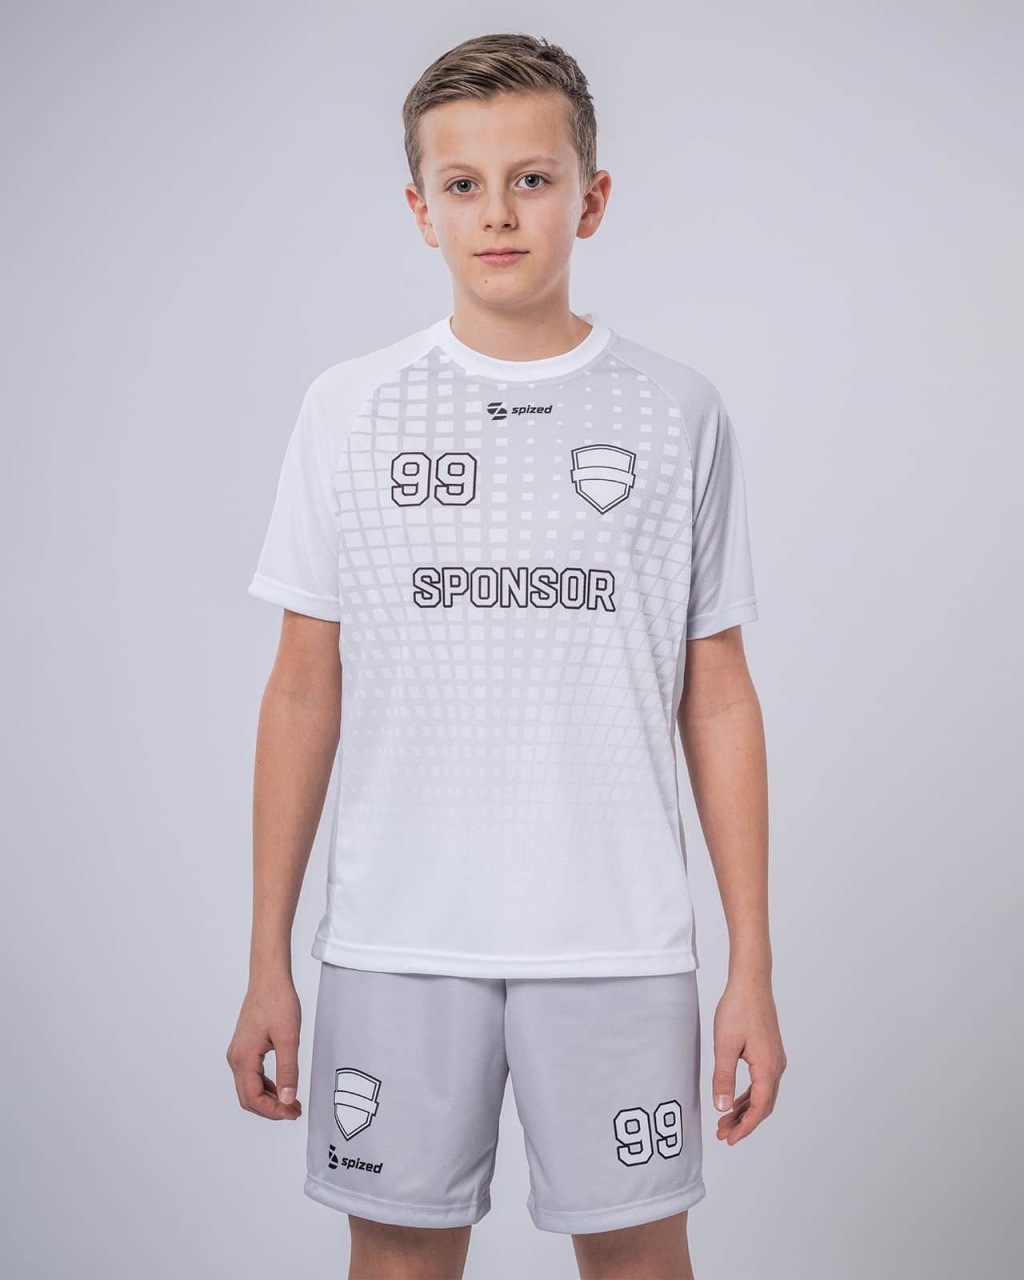 Viborg children's handball jersey